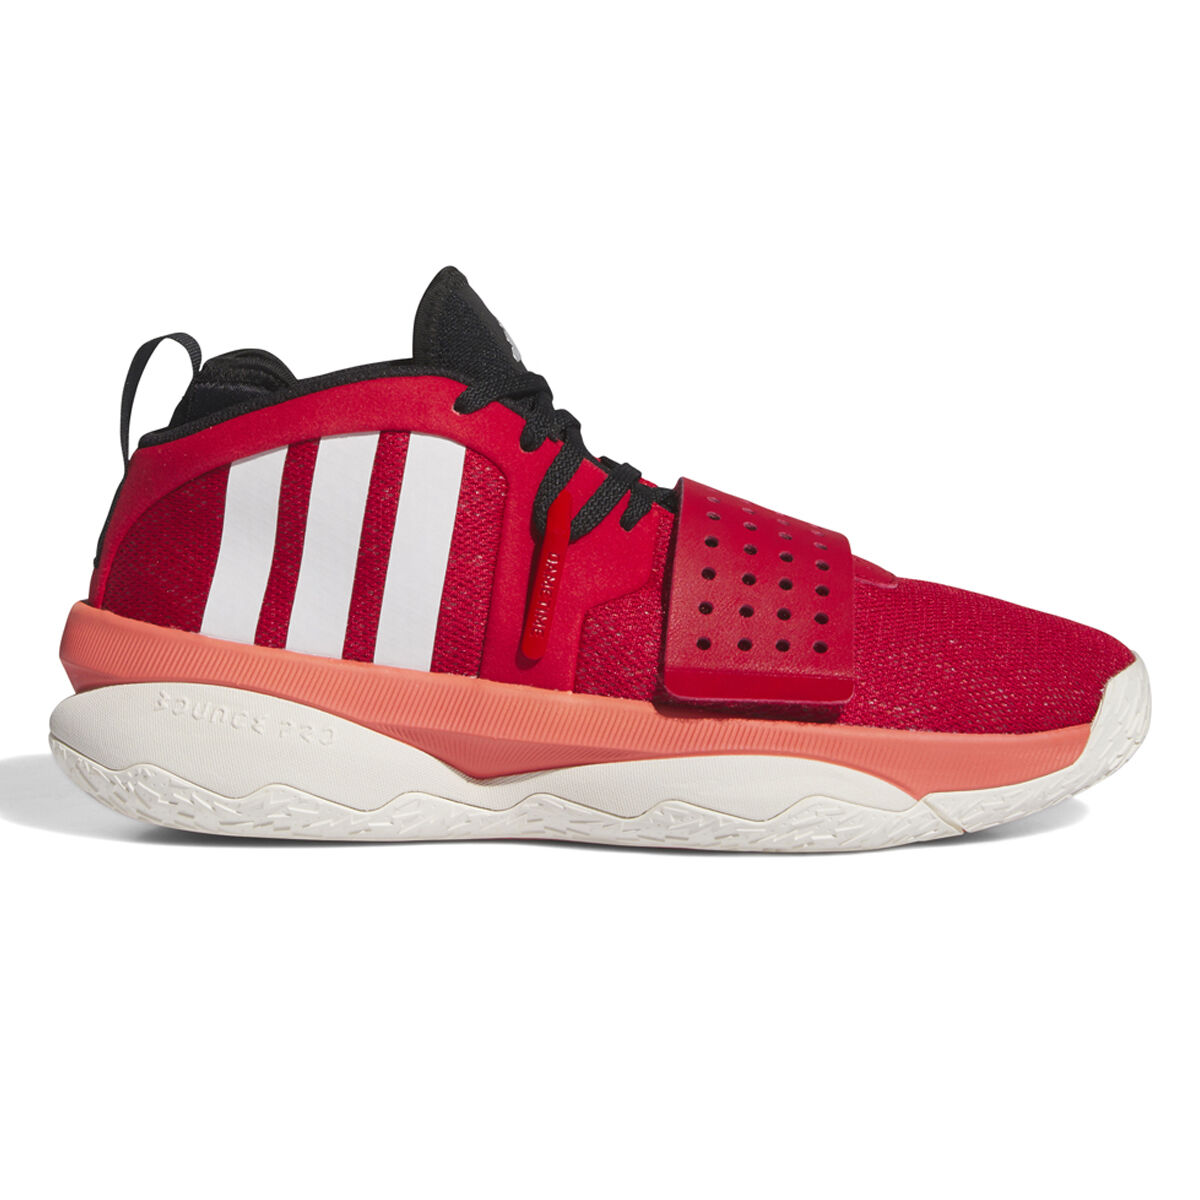 adidas Dame 8 Extply Best of Adidas Basketball Shoes | Rebel Sport